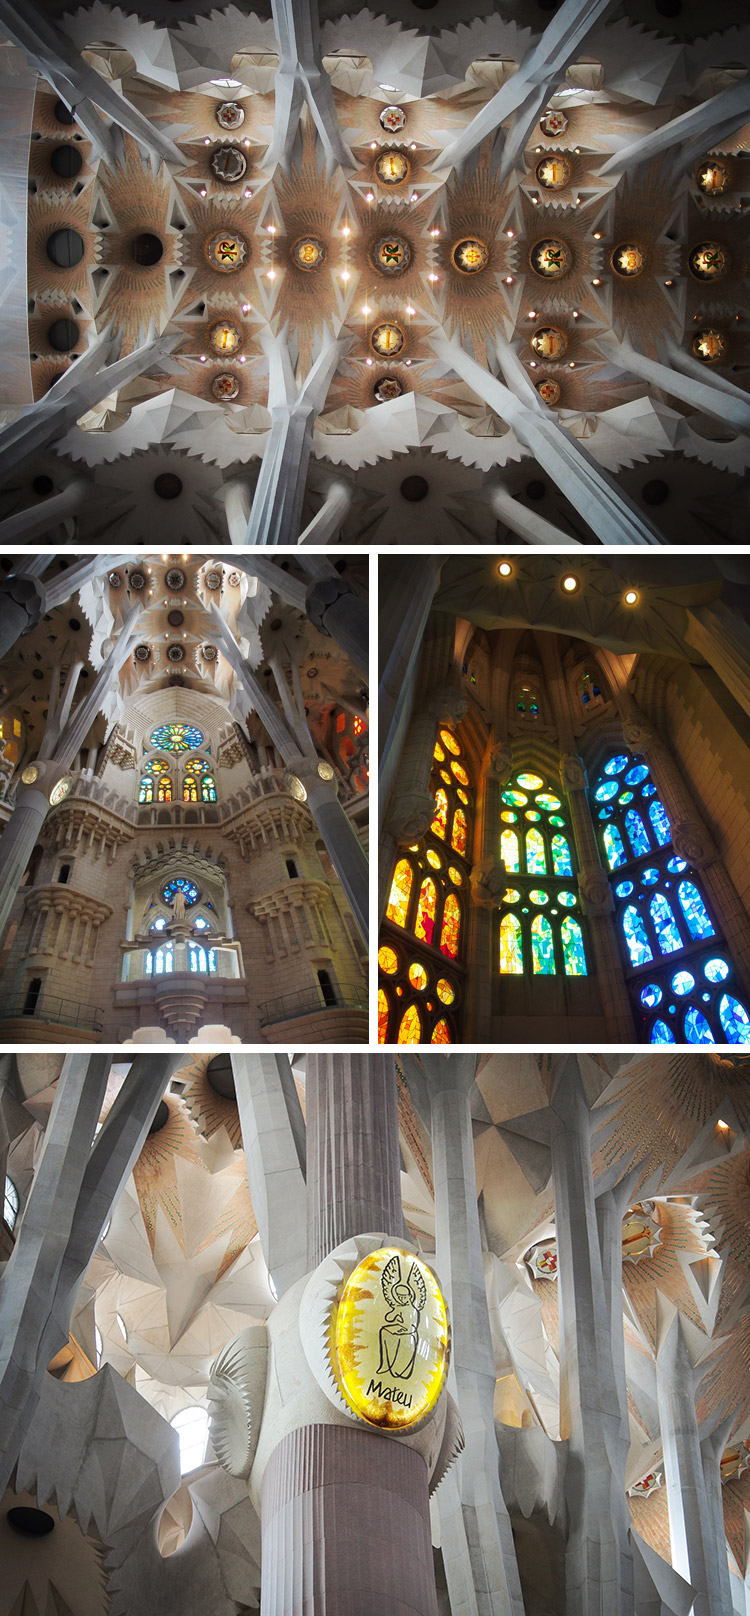 Sagrada Familia Gaudi Barcelone